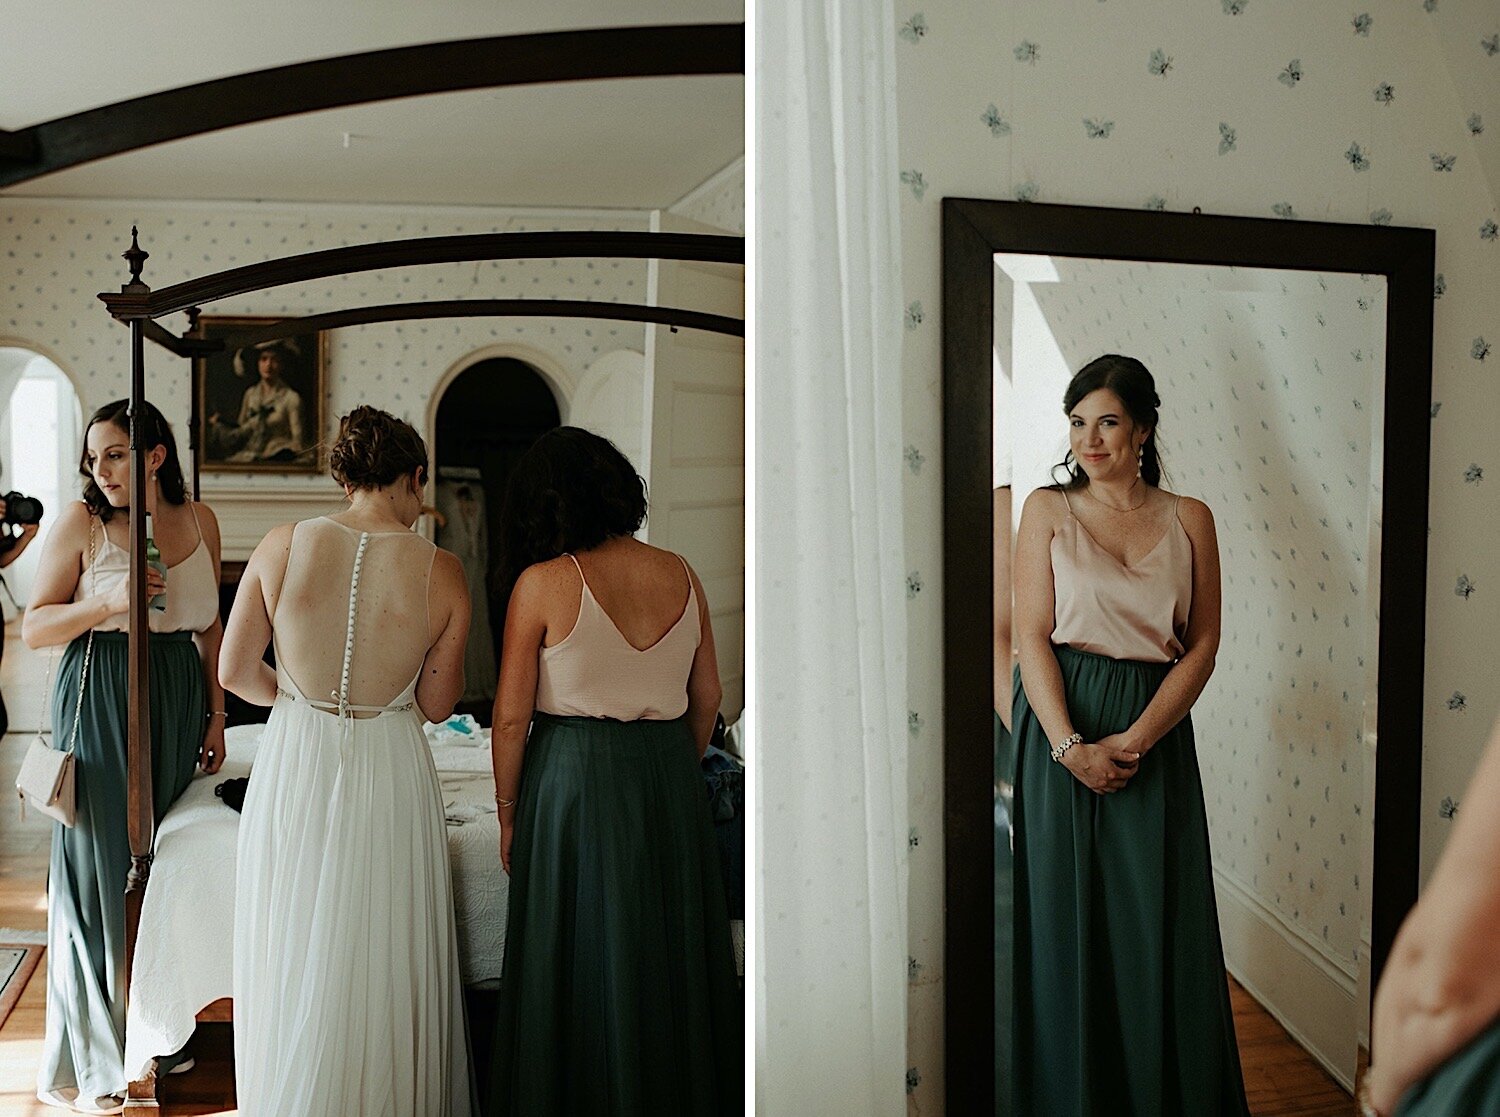 Blush and Emerald Wedding in the Woods | Oregon Wedding Photographer